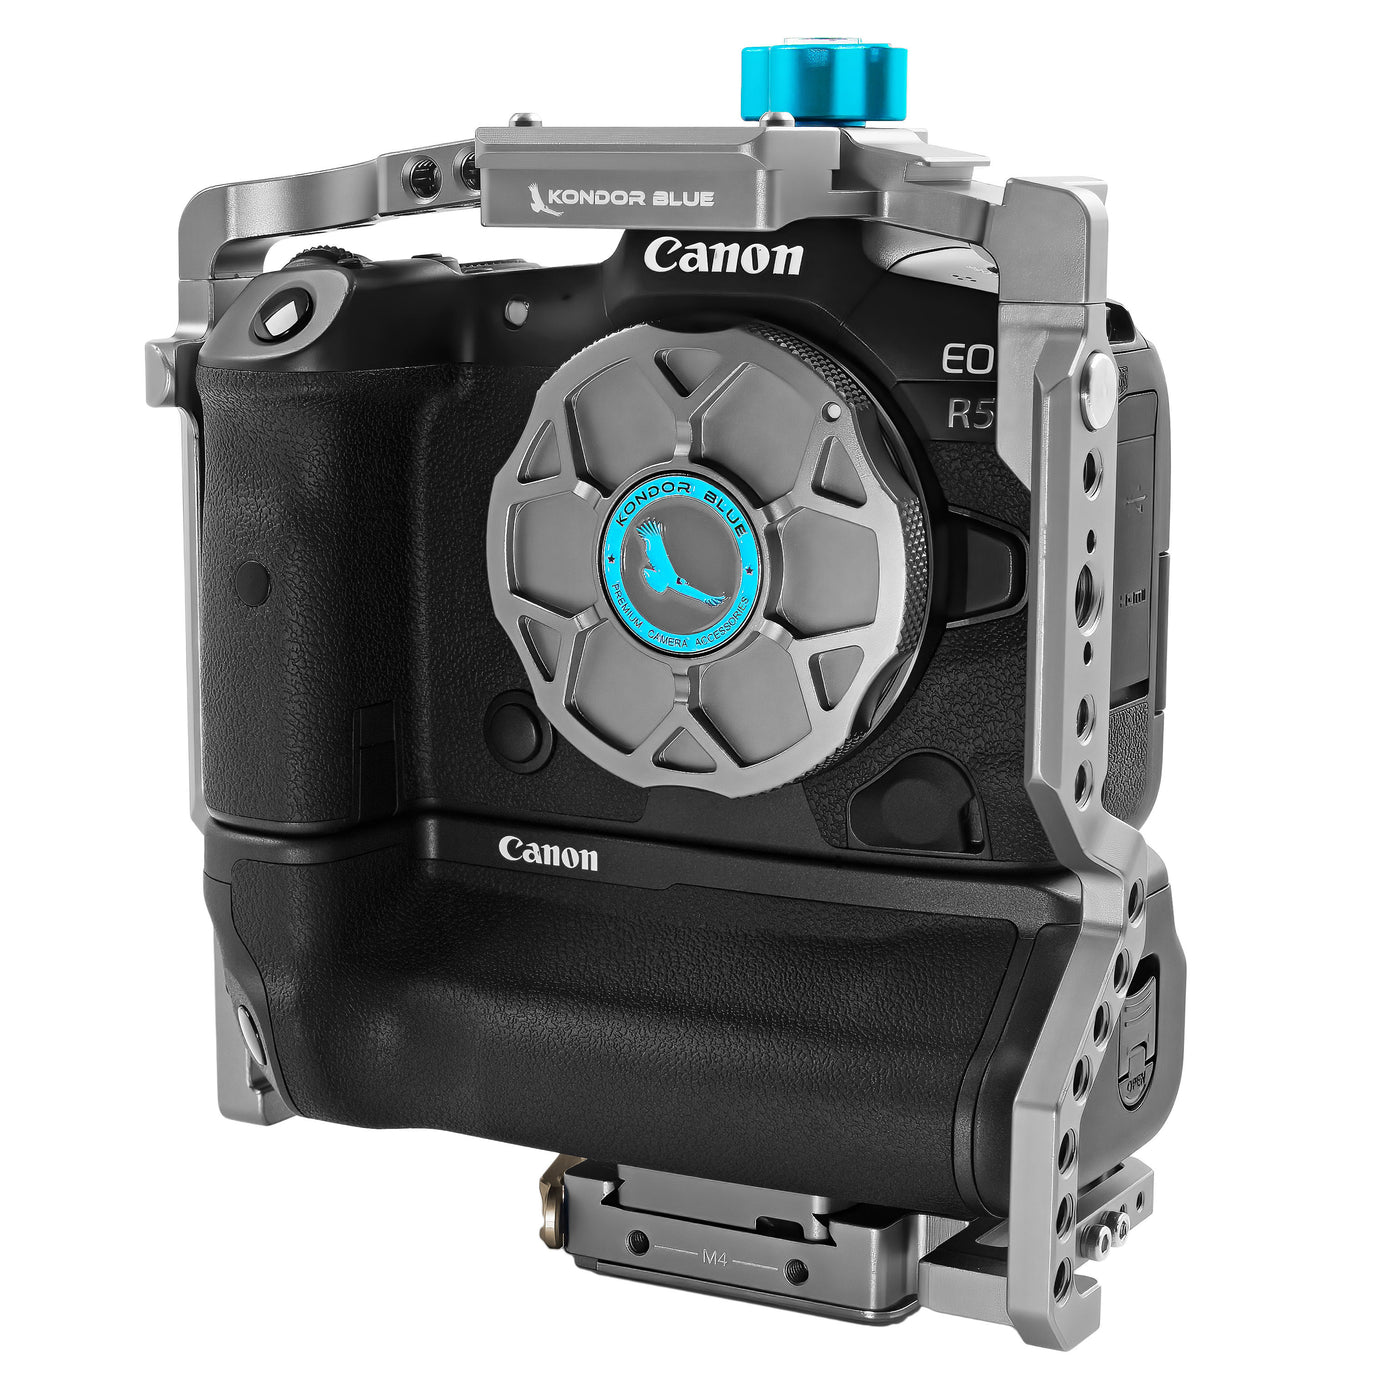 Canon R5/R6/R Arca Battery Grip Cage